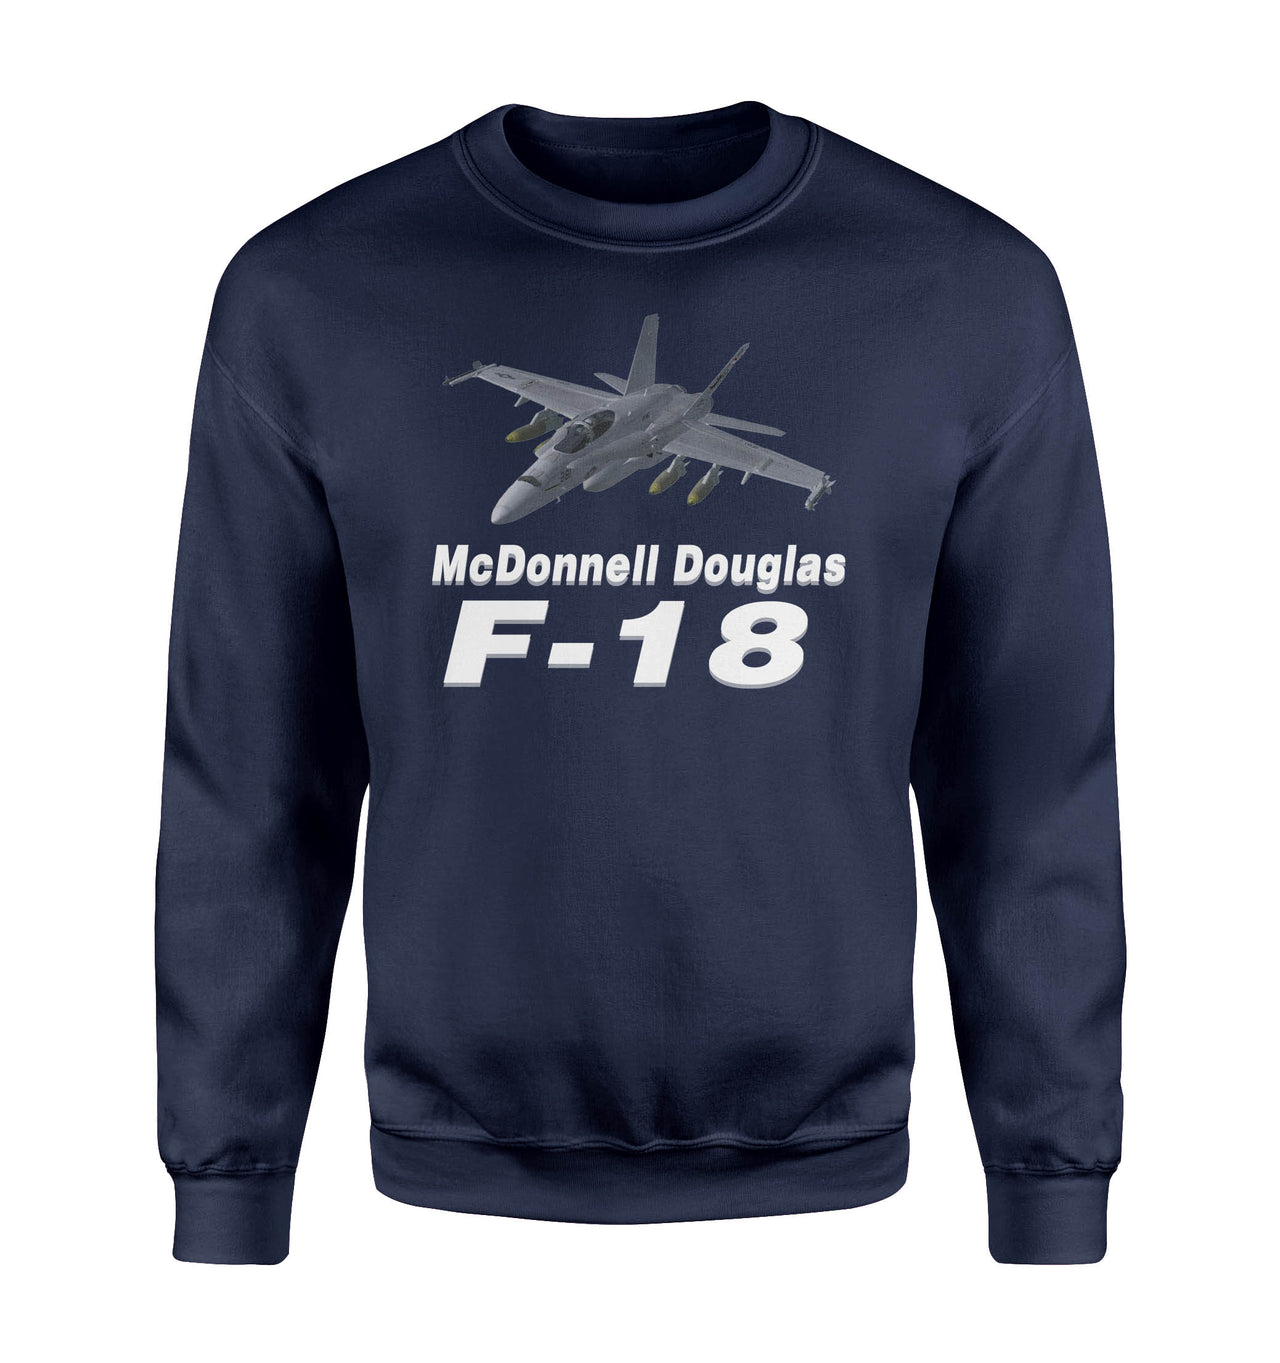 The McDonnell Douglas F18 Designed Sweatshirts